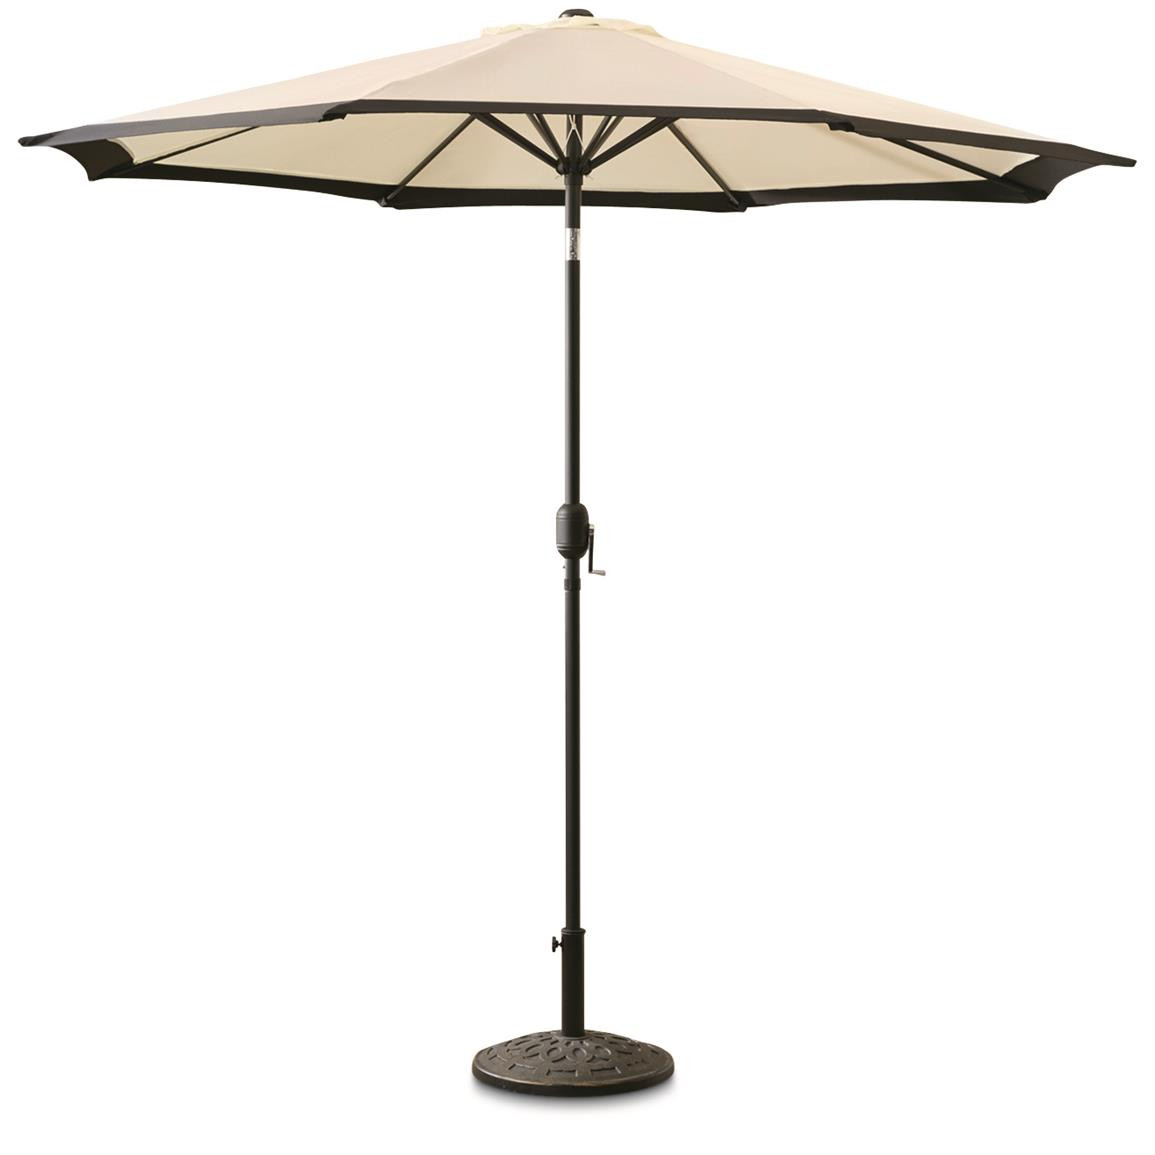 Best ideas about Black Patio Umbrella
. Save or Pin CASTLECREEK 9 Two Tone Deluxe Market Patio Umbrella Now.